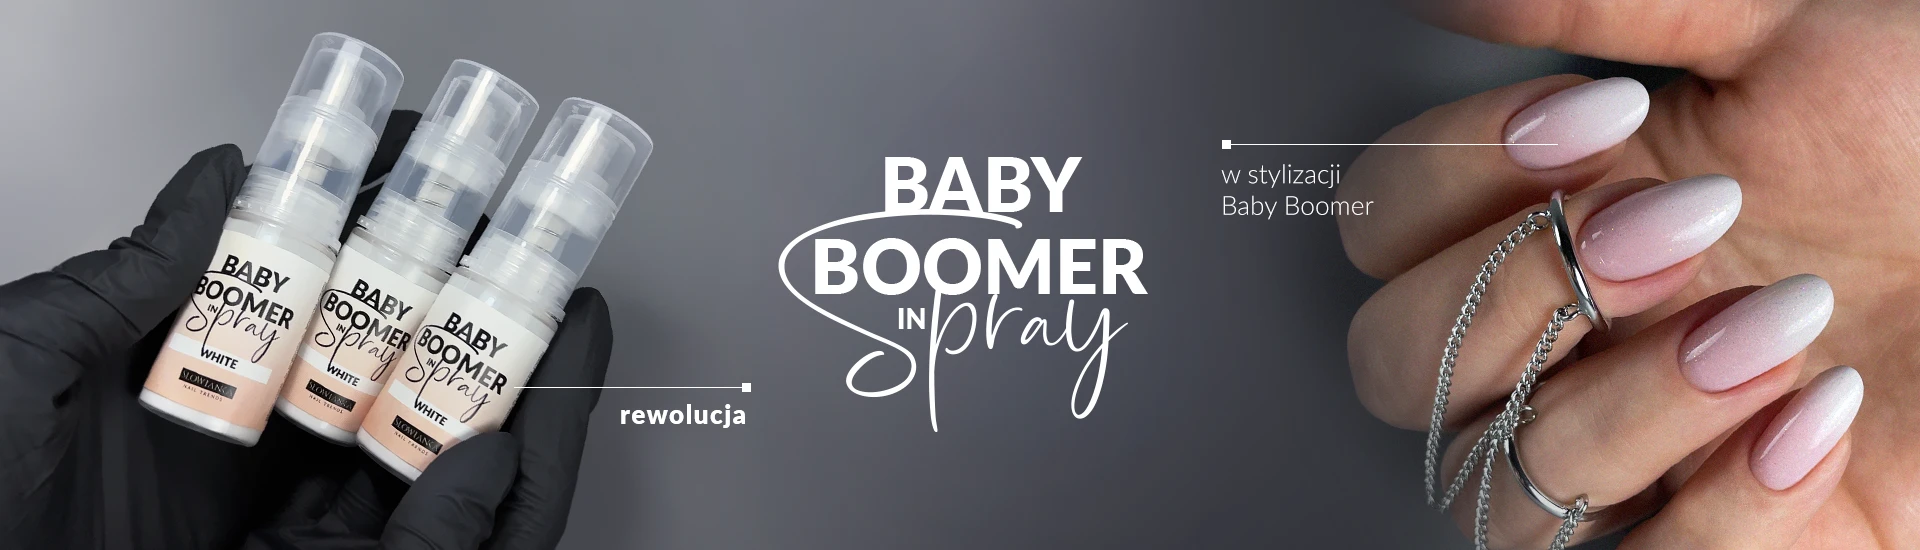 Baby Boomer in Spray